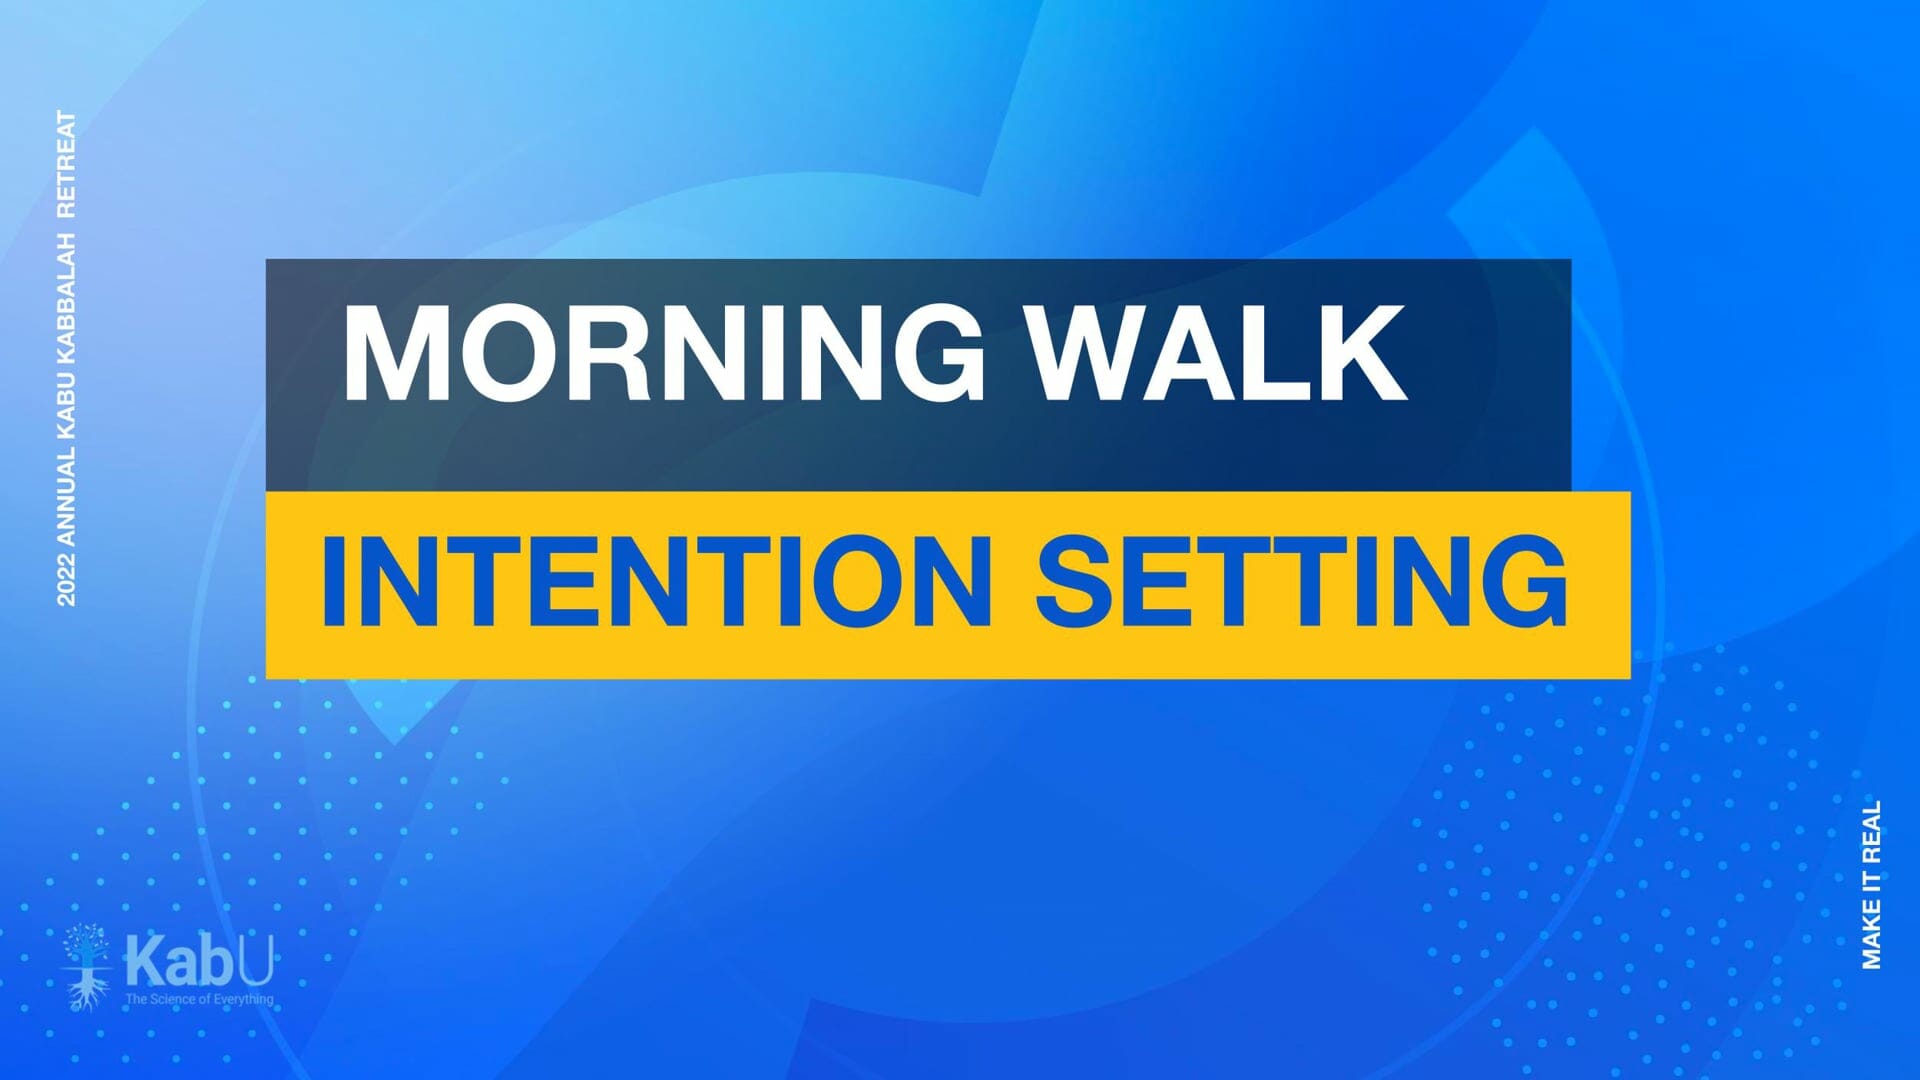 Sept 10, 2022 – Morning Walk – Intention Setting